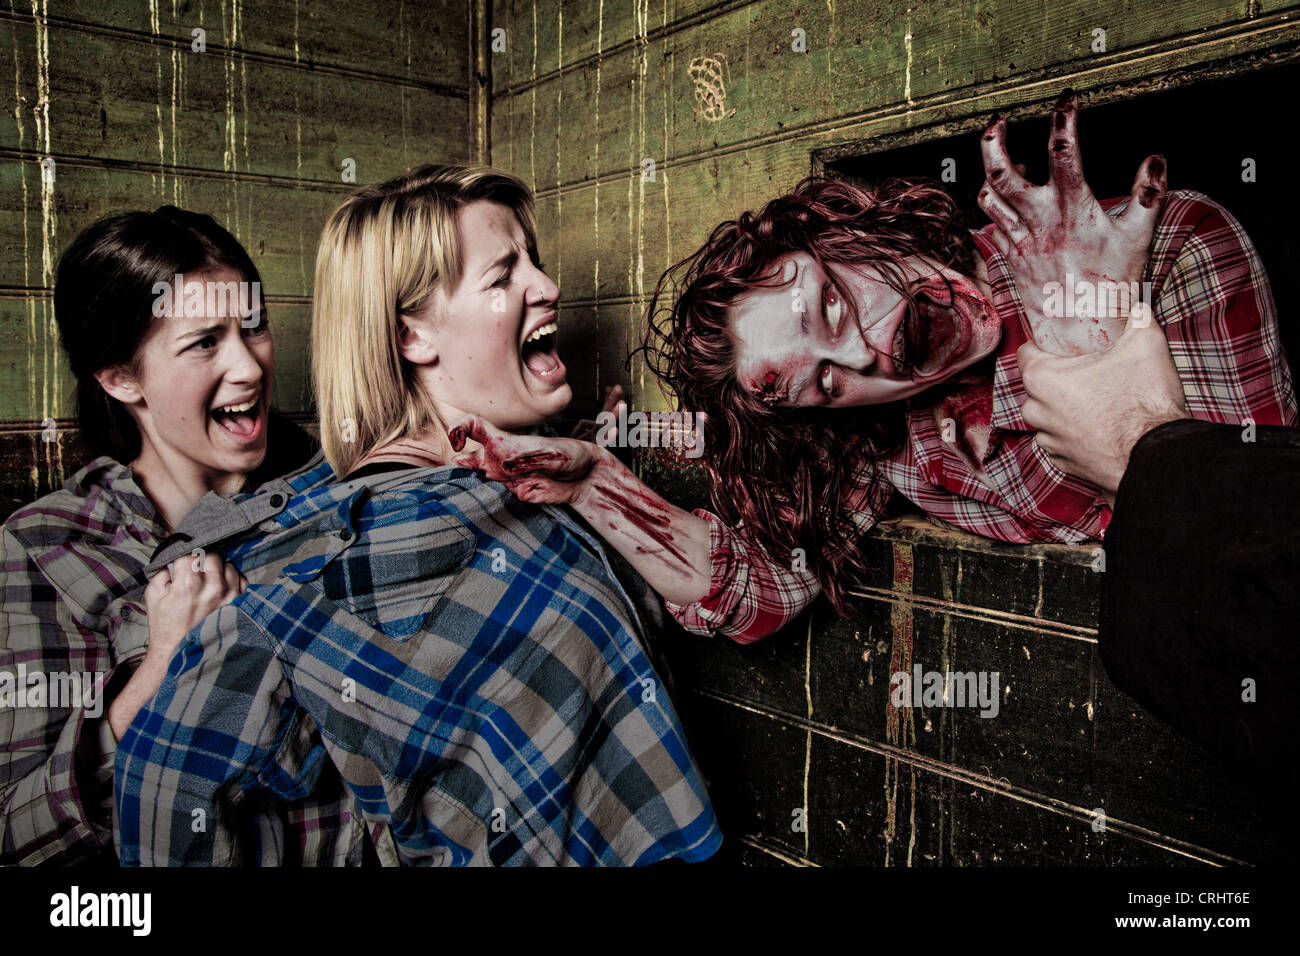 Zombie attack Stock Photo